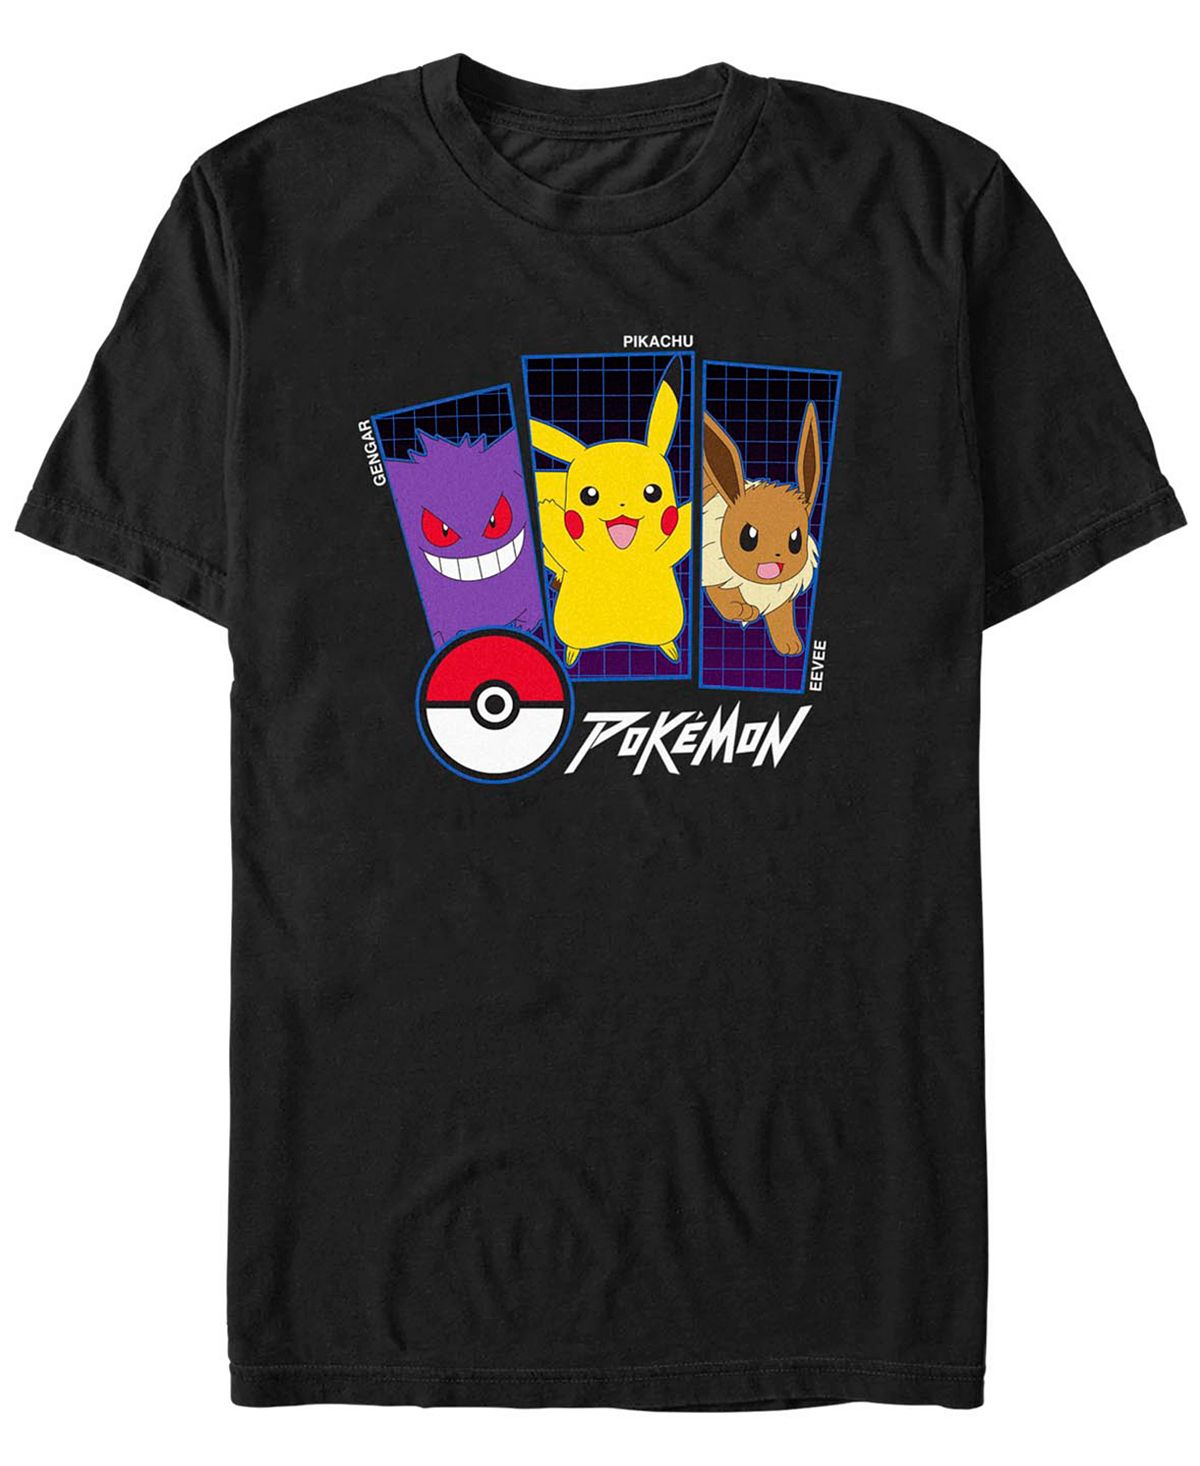 Мужская футболка с коротким рукавом pokemon trio Fifth Sun, черный мужская футболка с коротким рукавом cypress hill trio time fifth sun черный